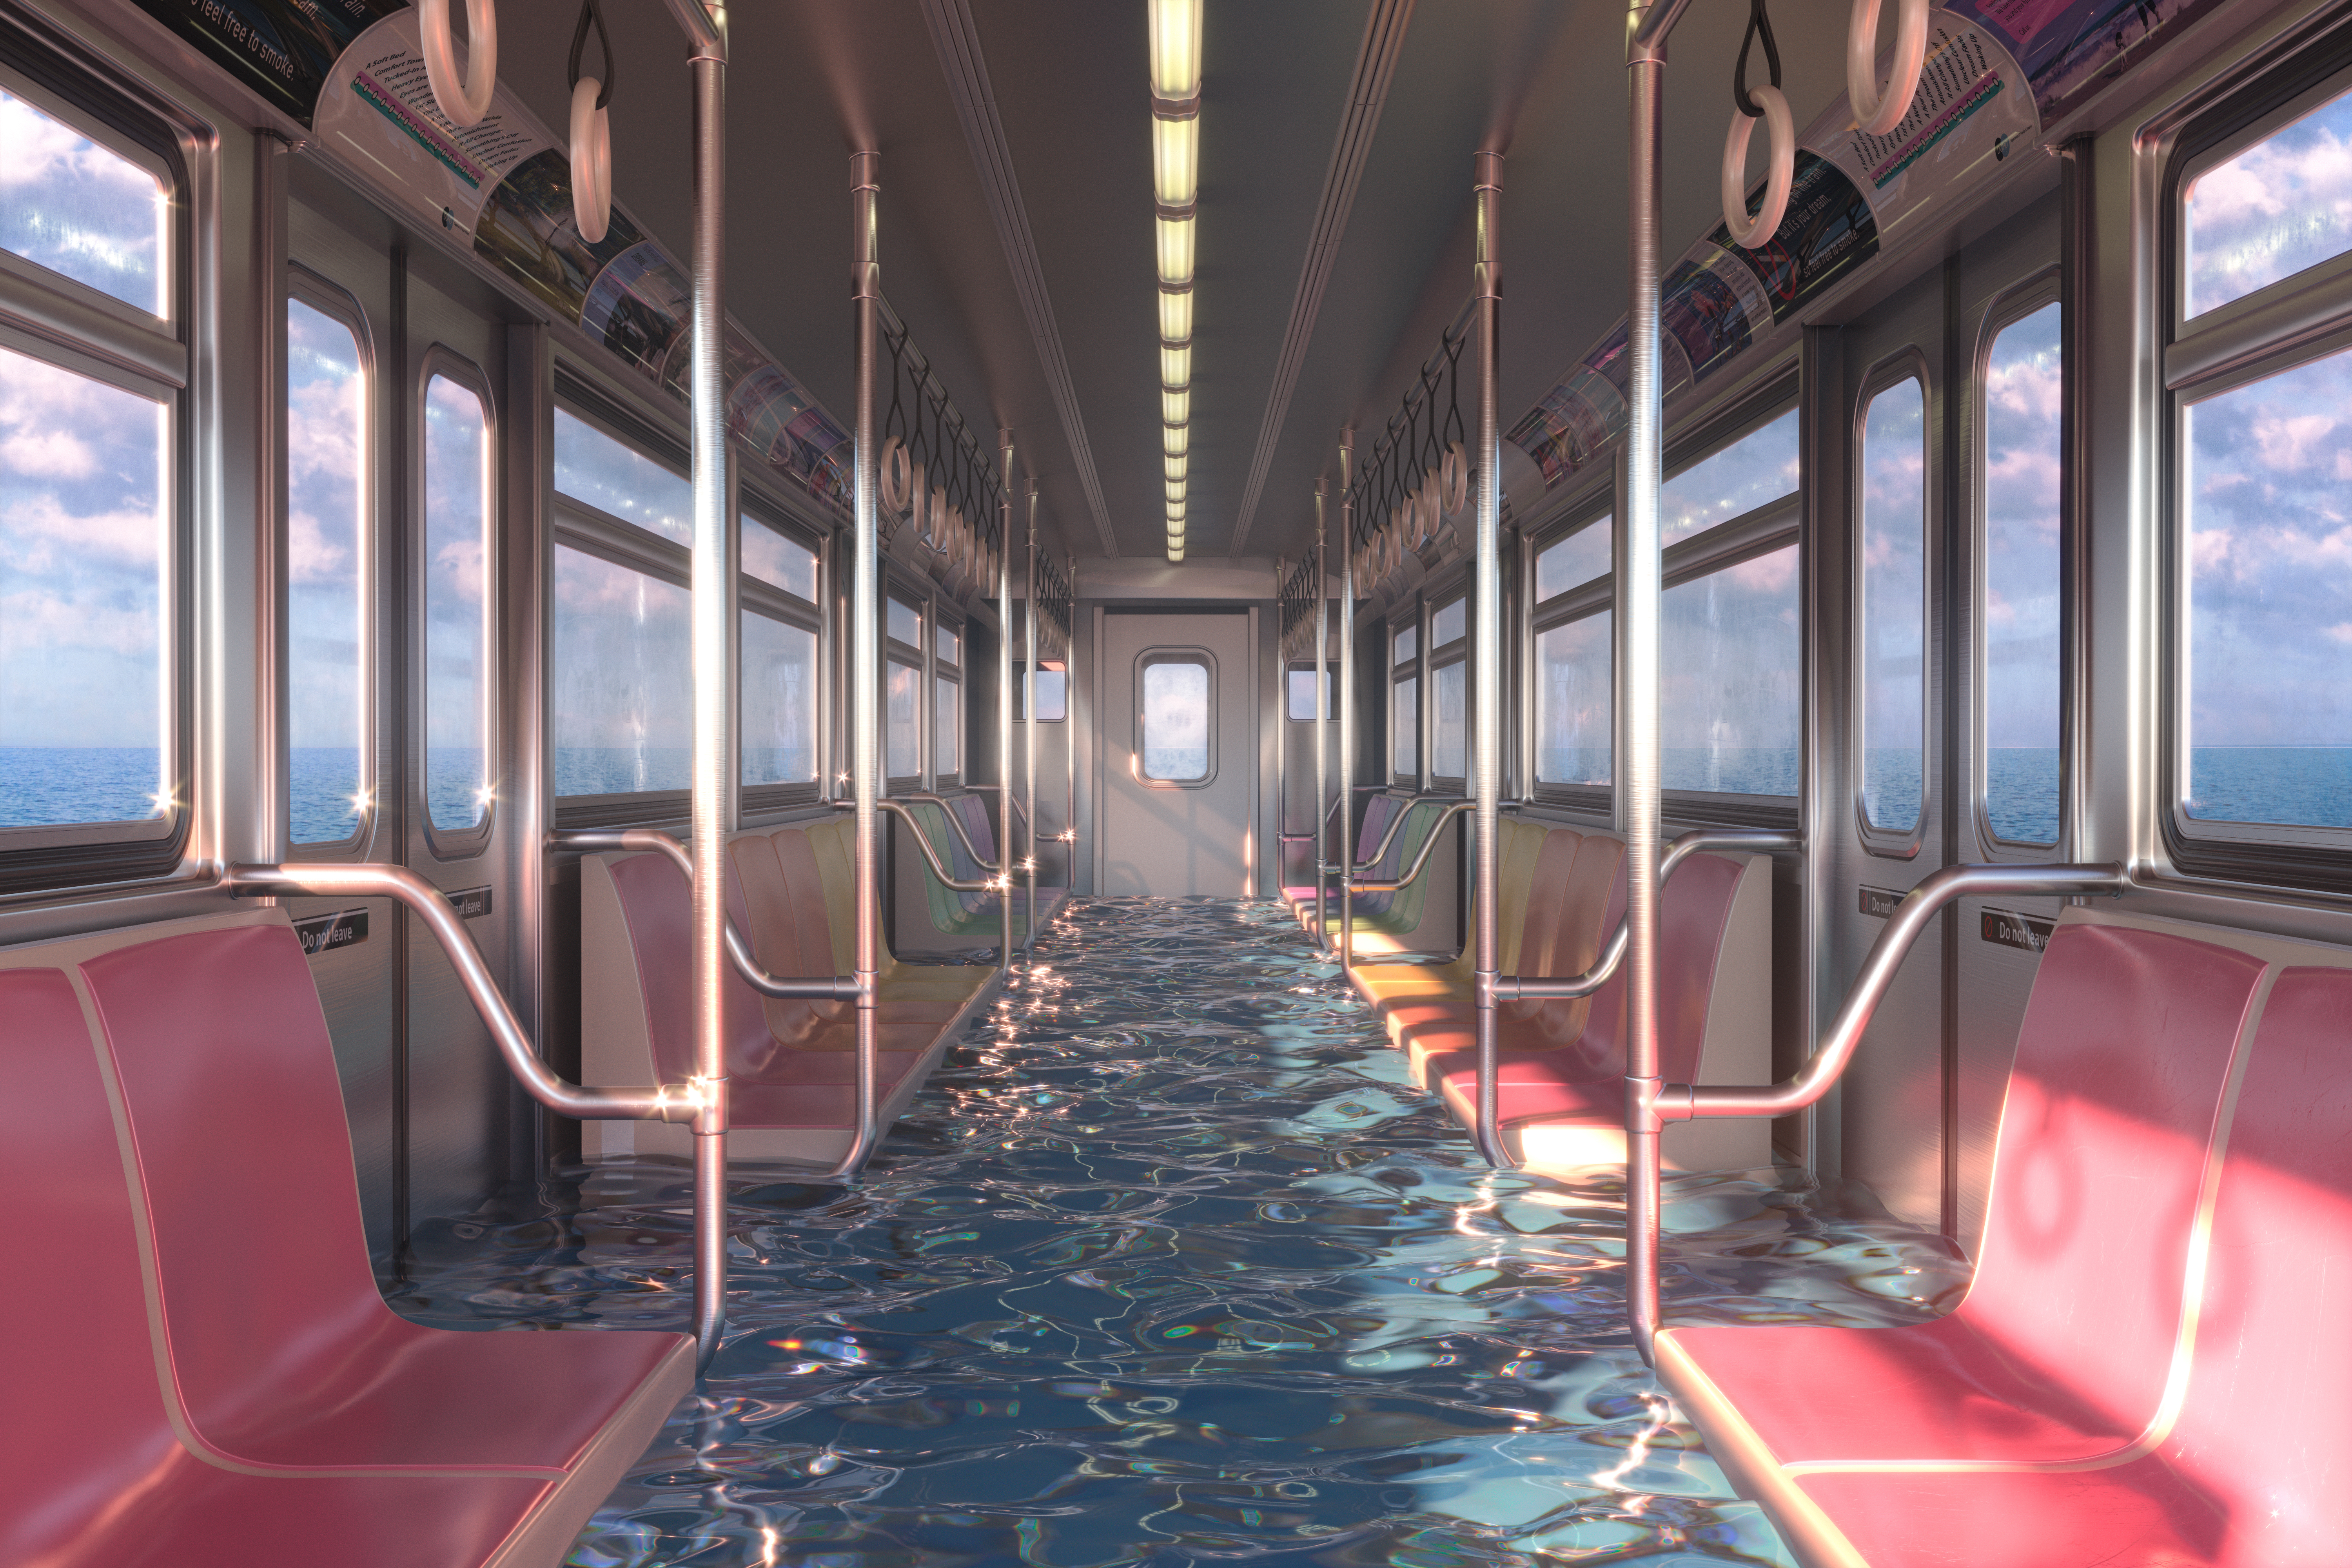 Digital Art Artwork Illustration Abstract Water Clouds Subway Train Station Wagon 6000x4000